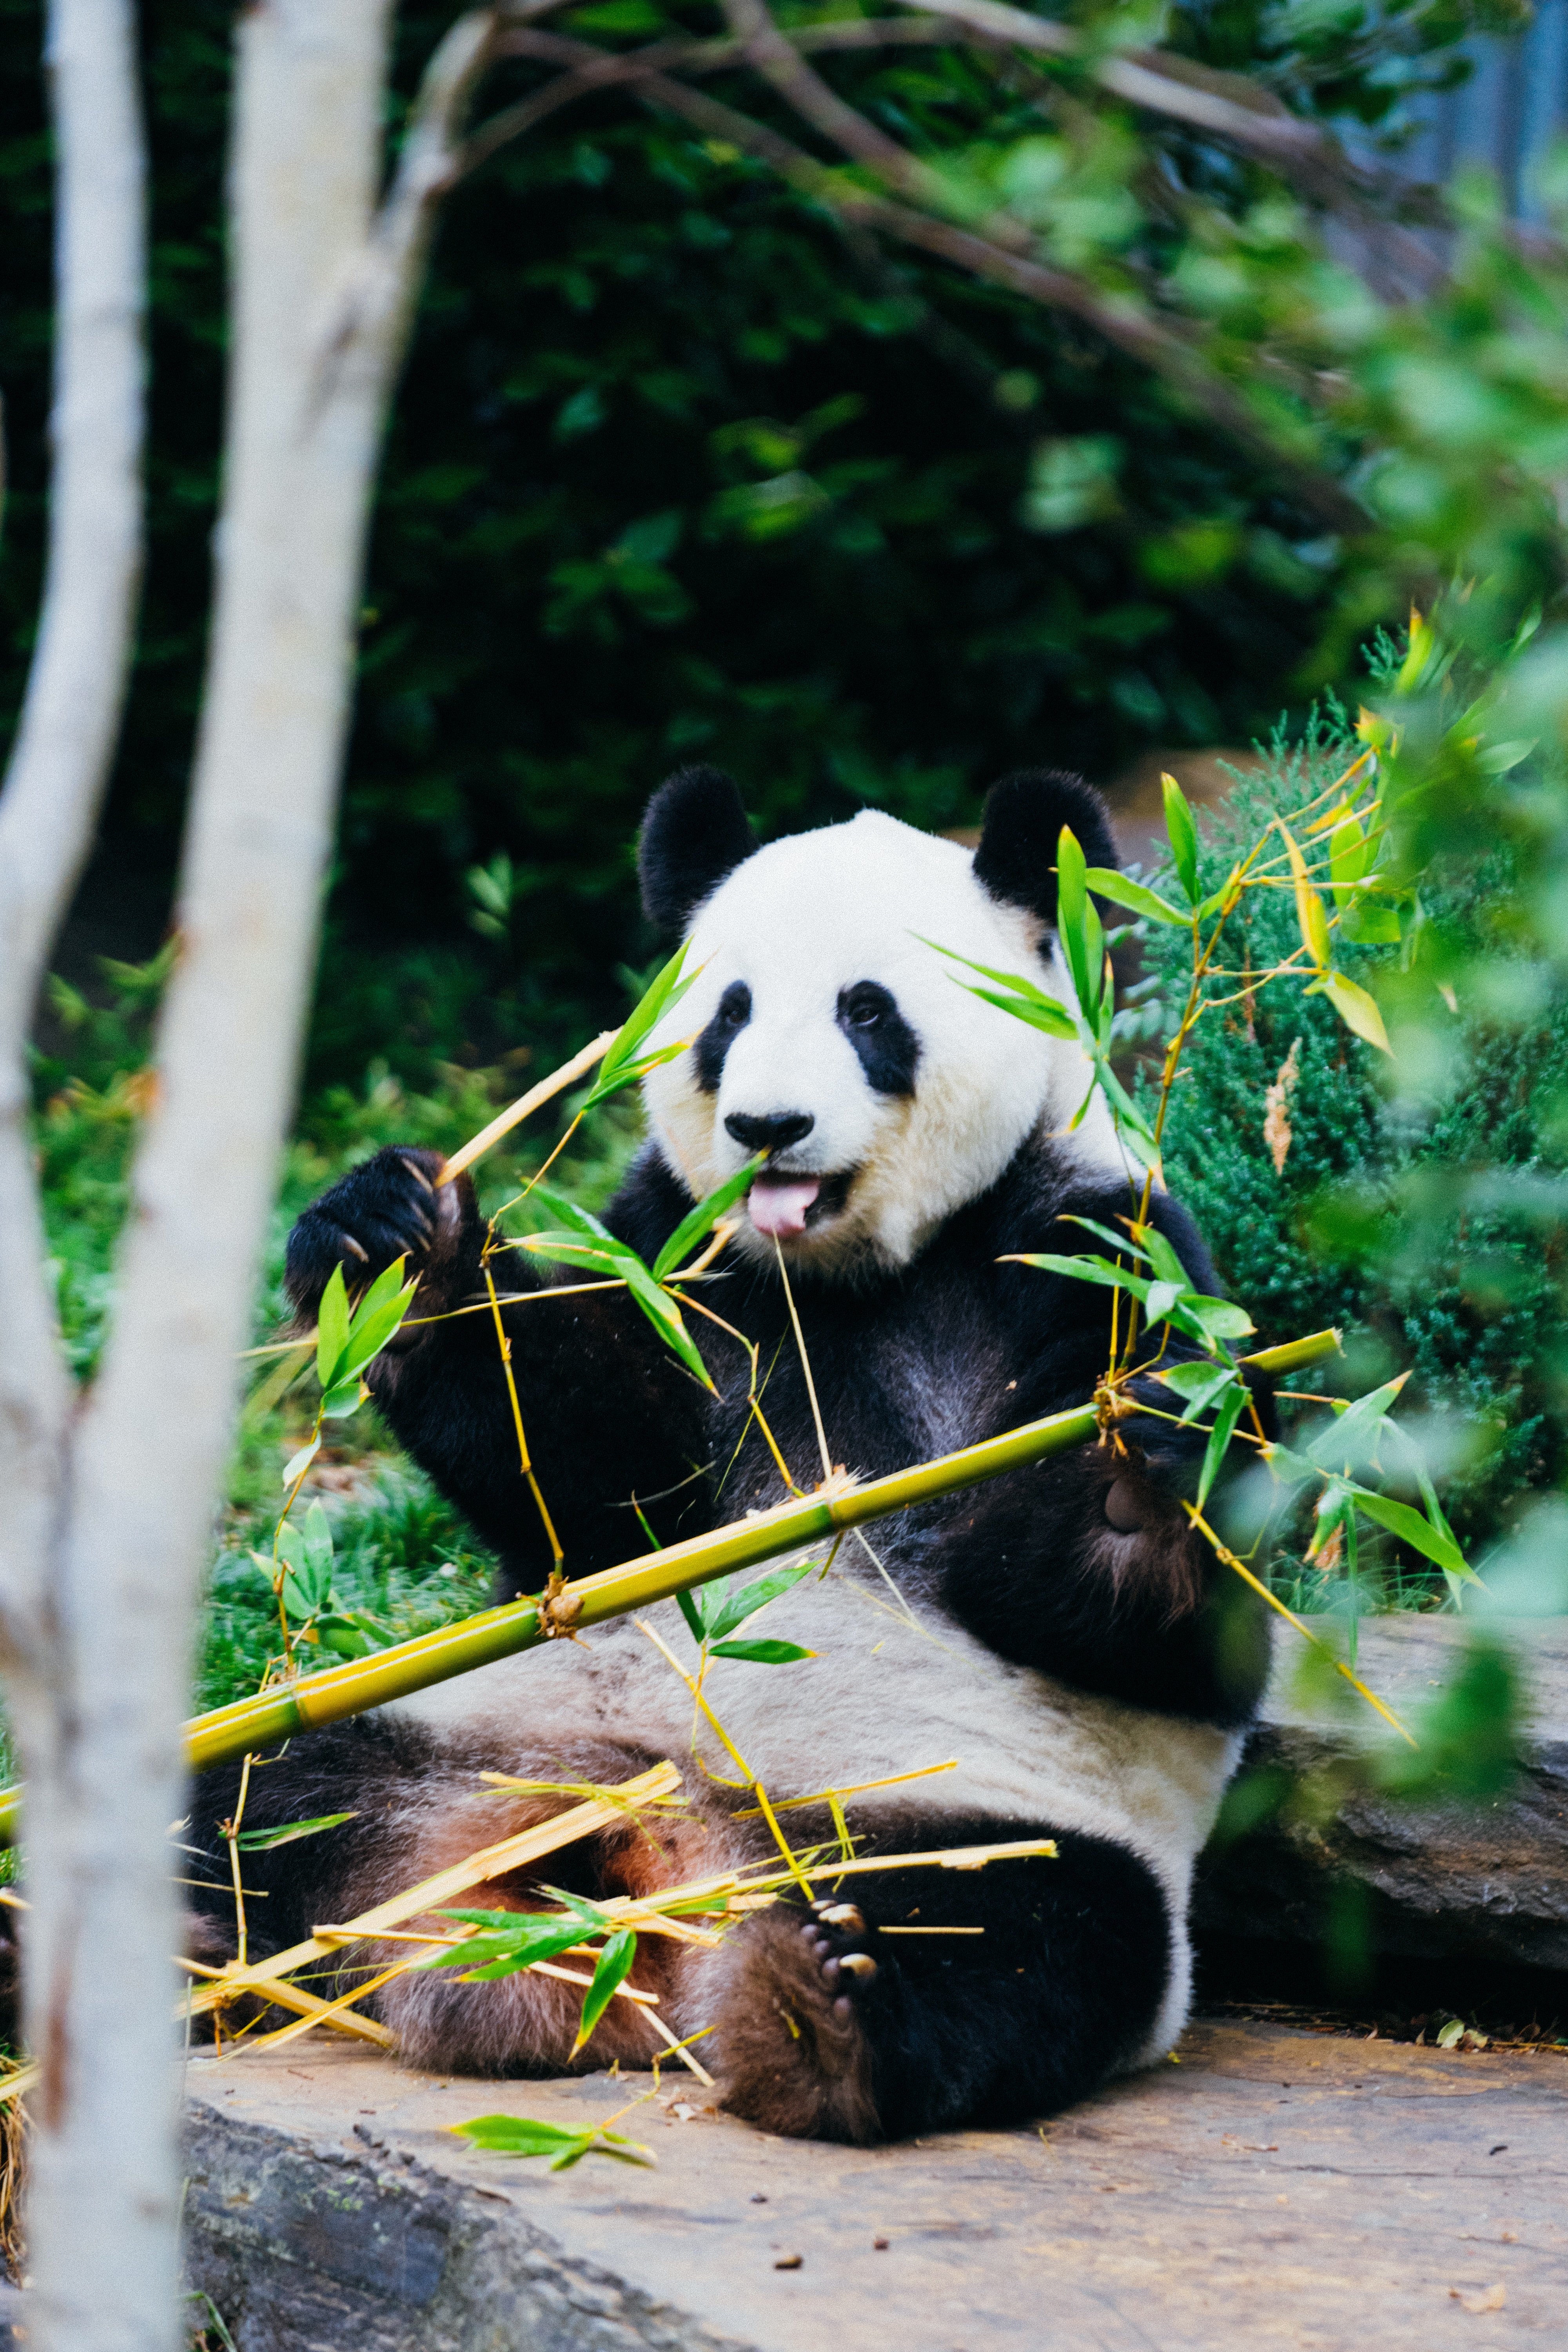 A Panda eating shoots and leaves | Source: Unsplash.com